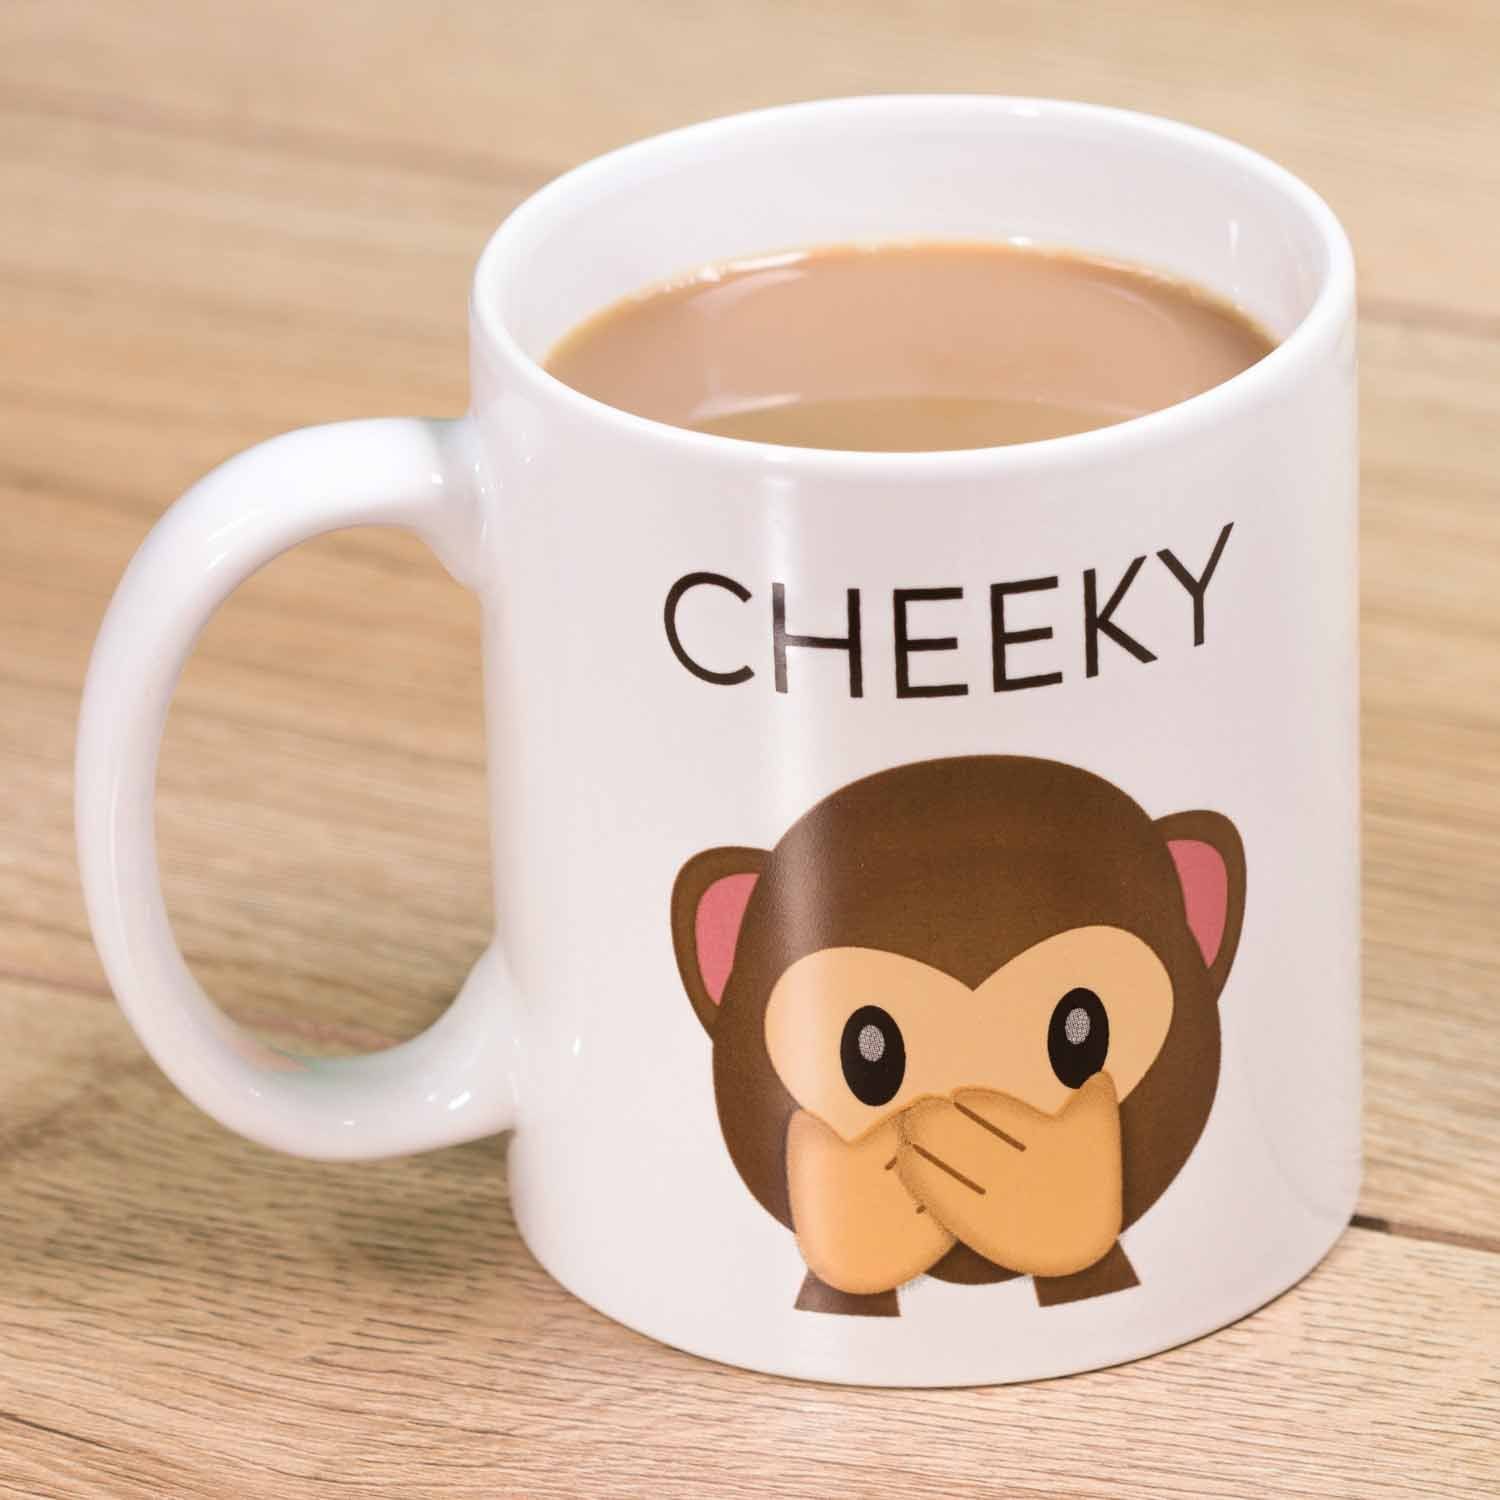 Thumbs Up Tasse "Cheeky Mug" - Emoji Tasse, Keramik